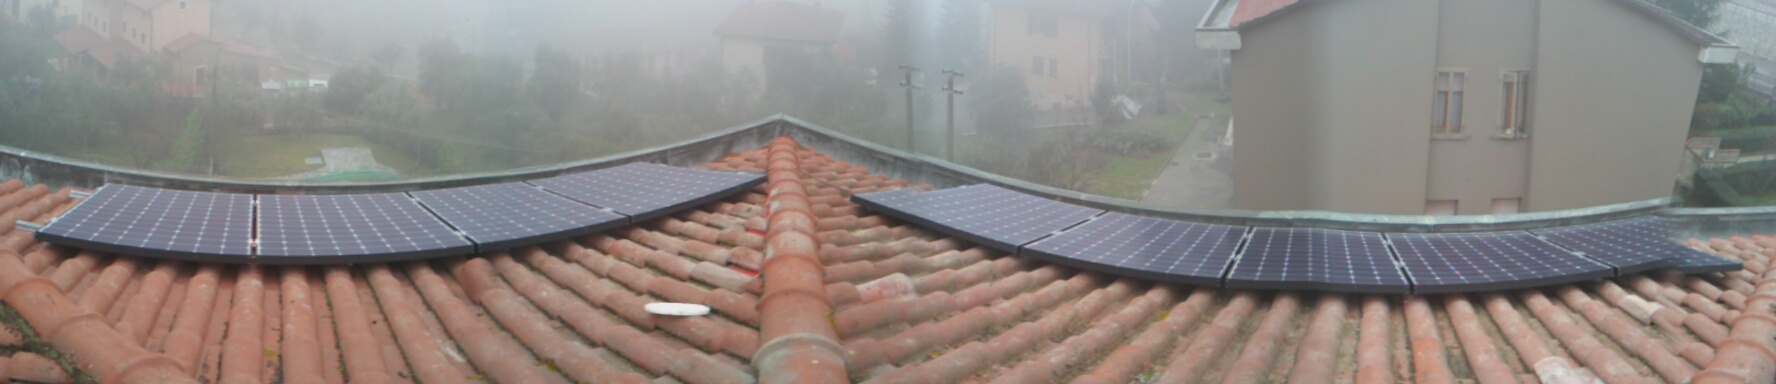 Impianto Fotovoltaico Lightland-SunPower in Lombardia